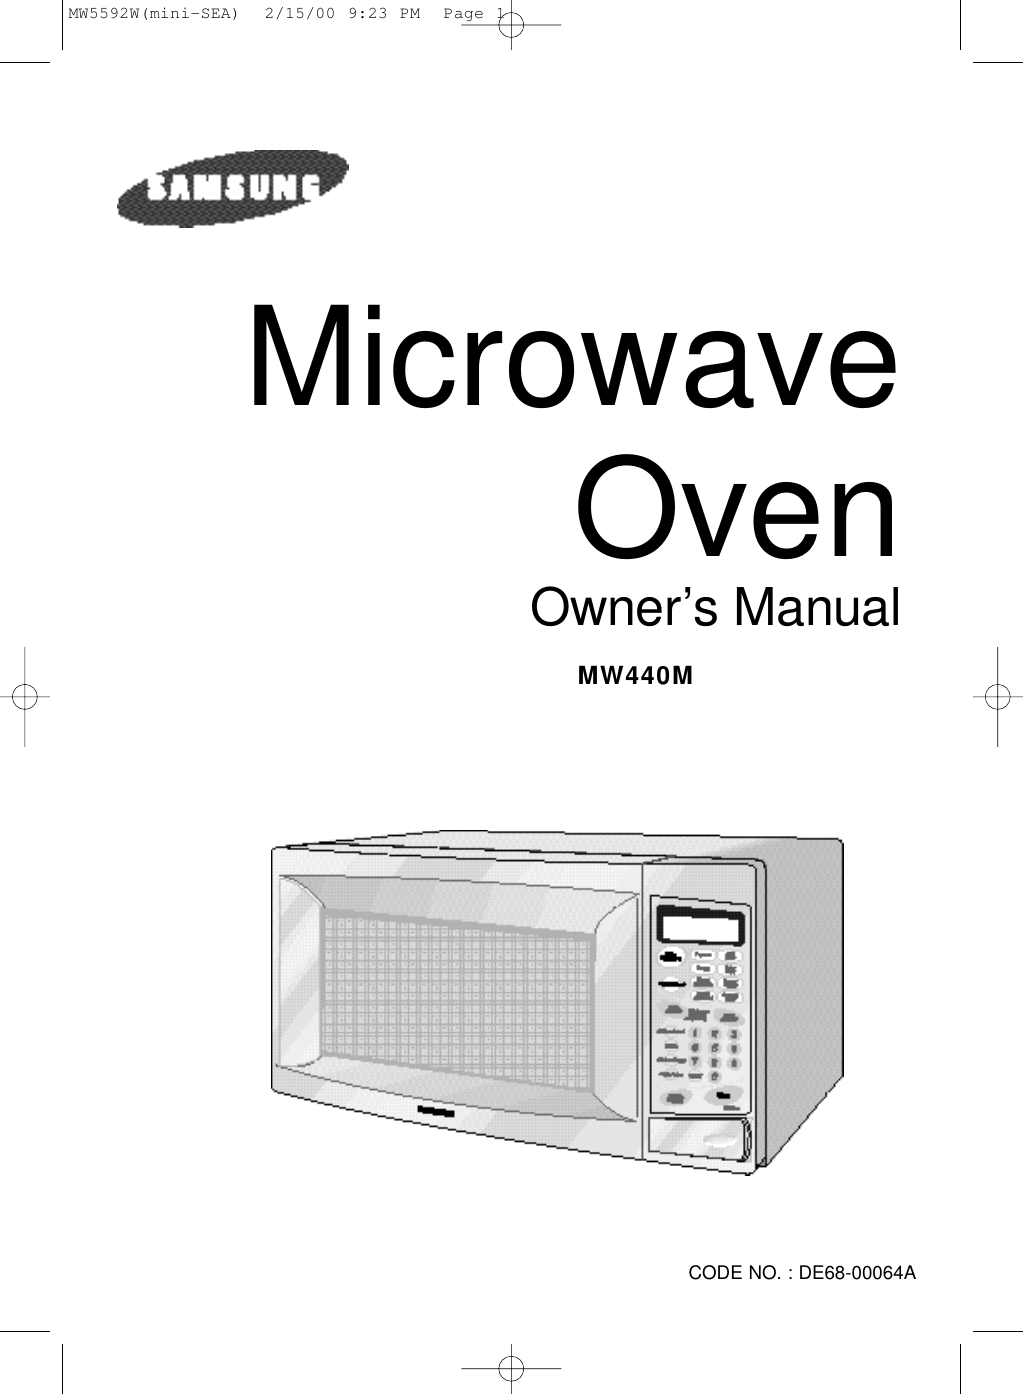 Microwave OvenOwner’s ManualMW440MCODE NO. : DE68-00064AMW5592W(mini-SEA)  2/15/00 9:23 PM  Page 1